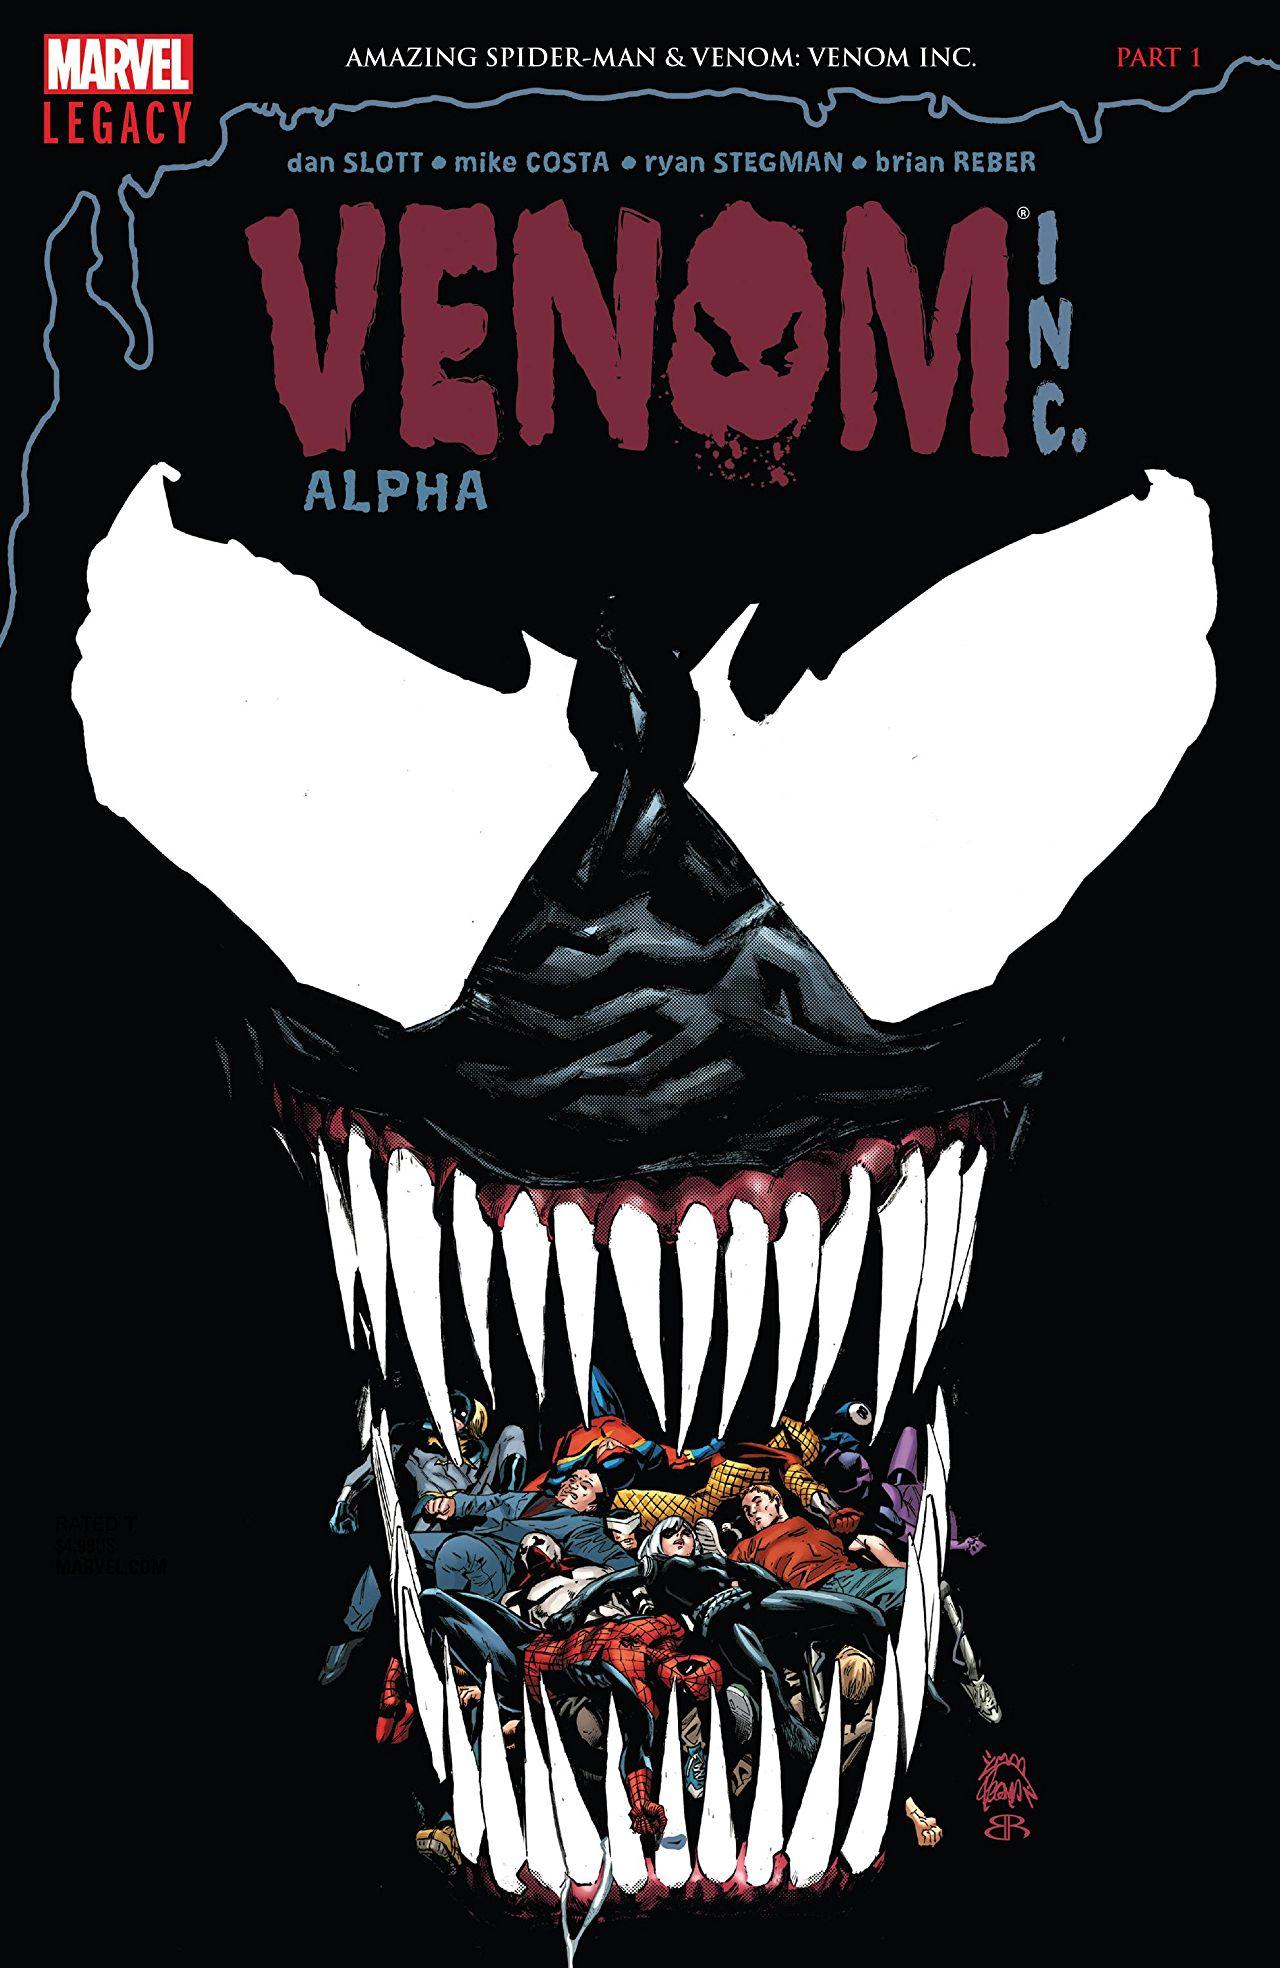 Amazing Spider-Man & Venom: Venom Inc. Alpha Vol. 1 #1